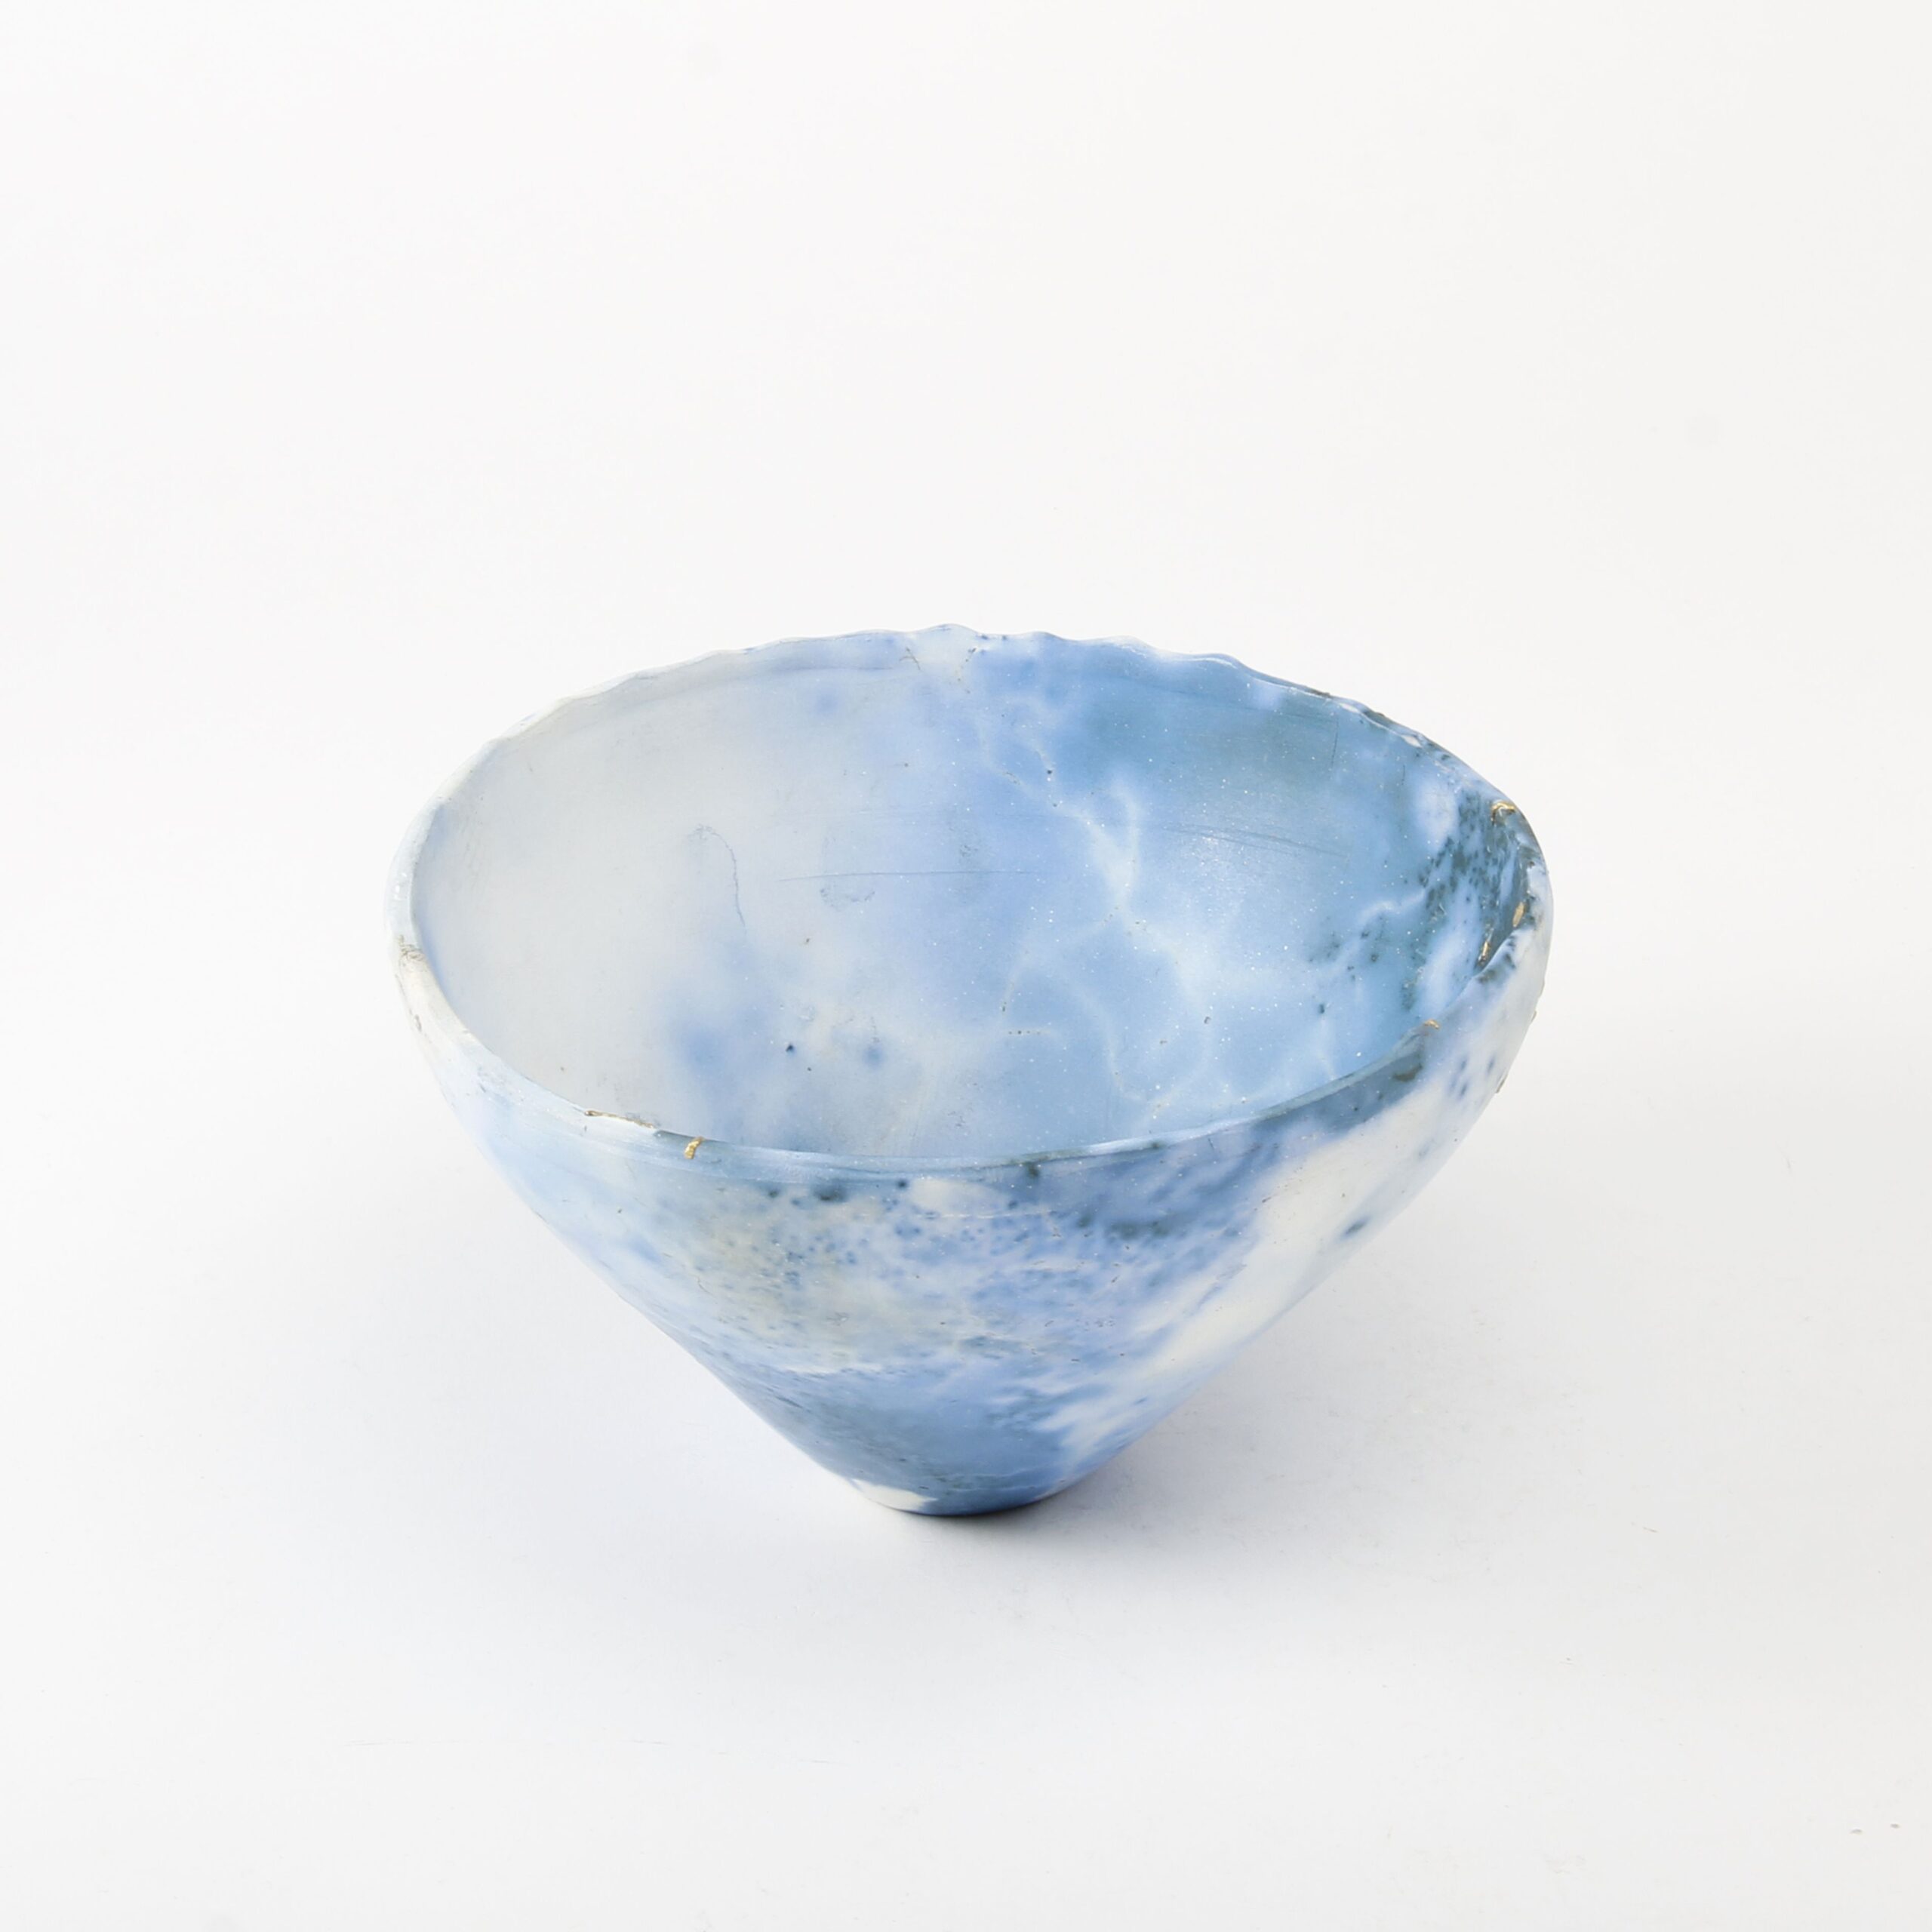 Alison Brannen: Medium Bowl Product Image 6 of 6